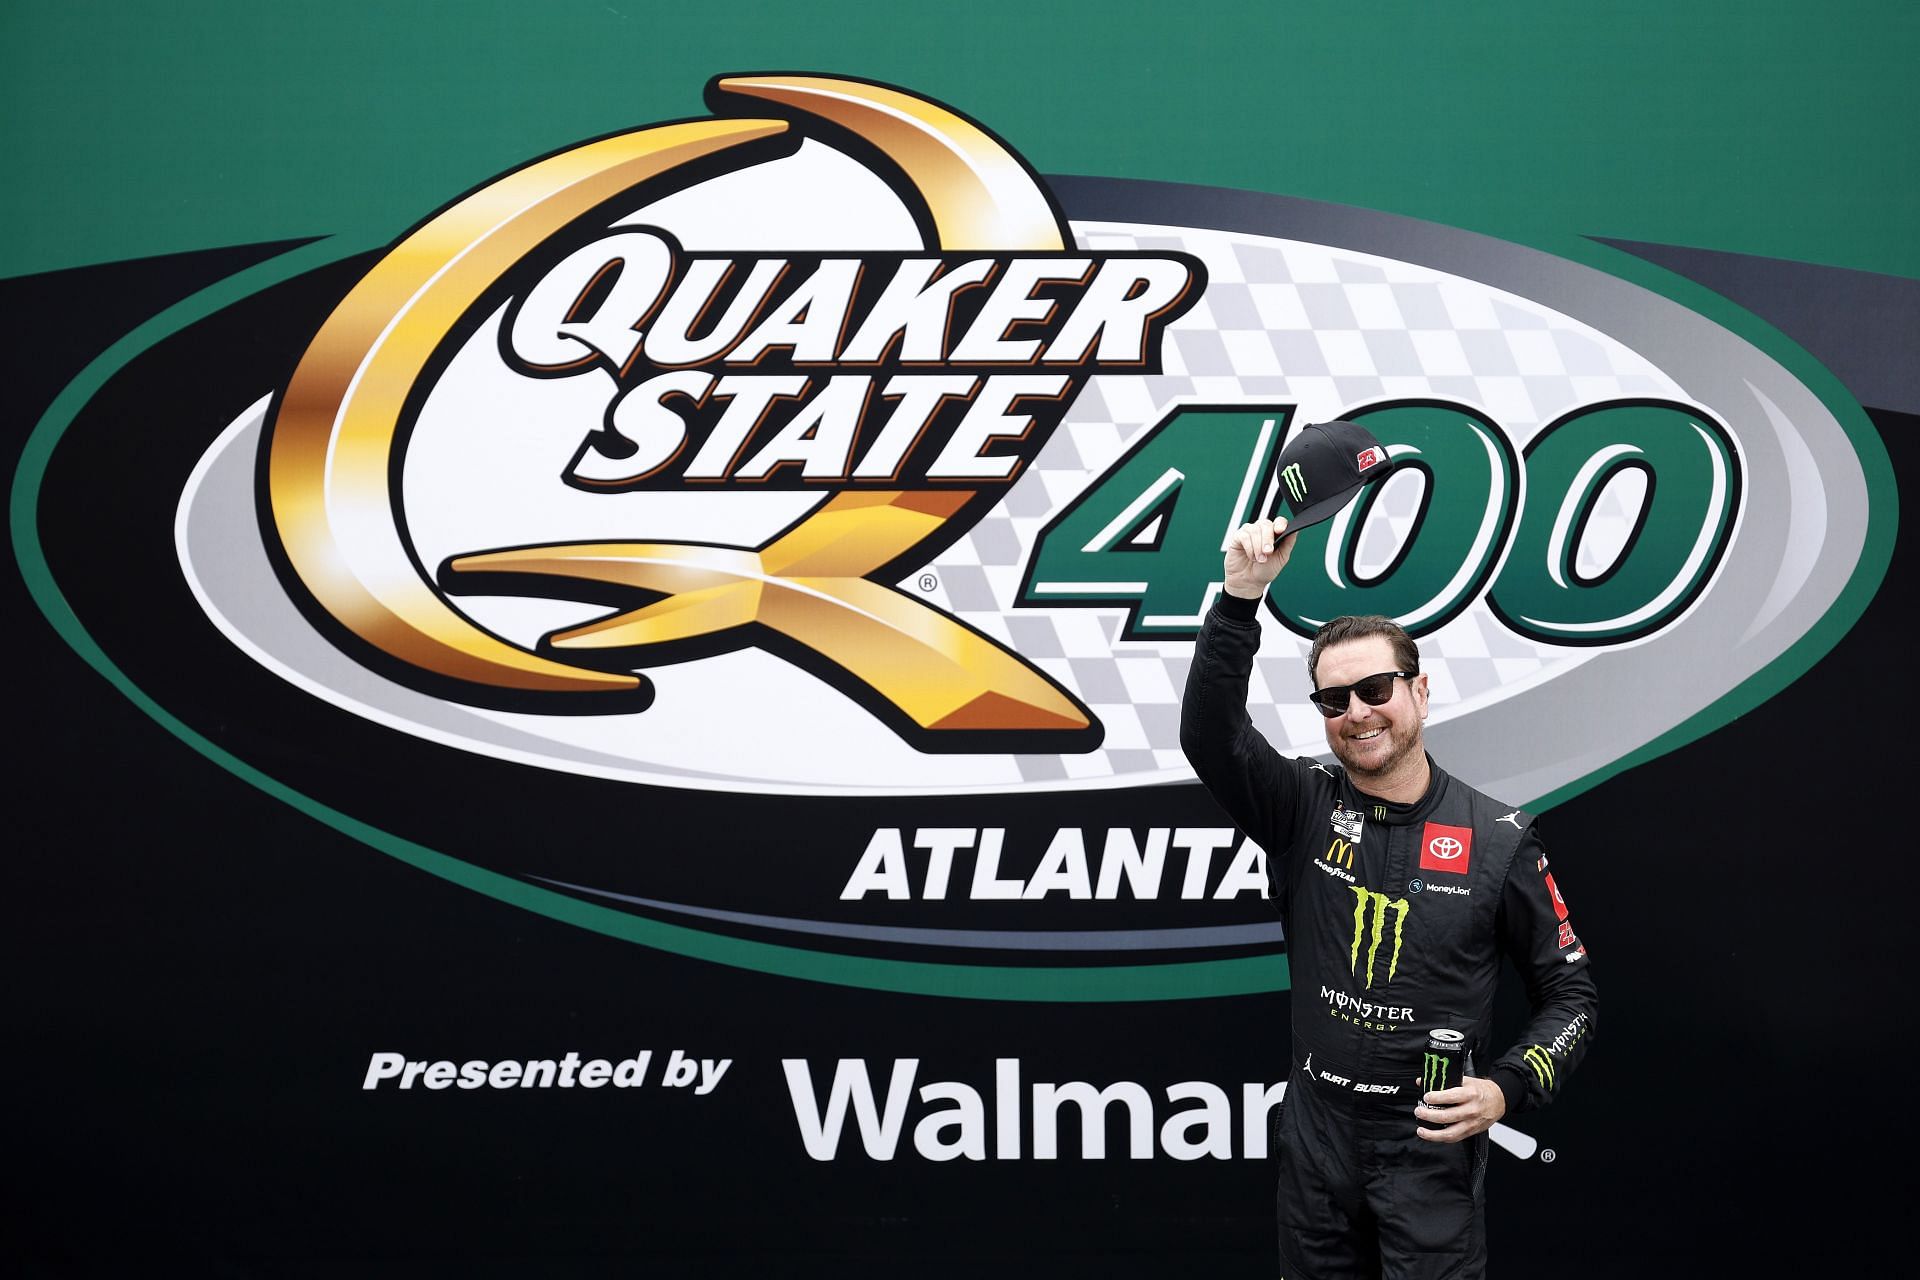 NASCAR Cup Series Quaker State 400